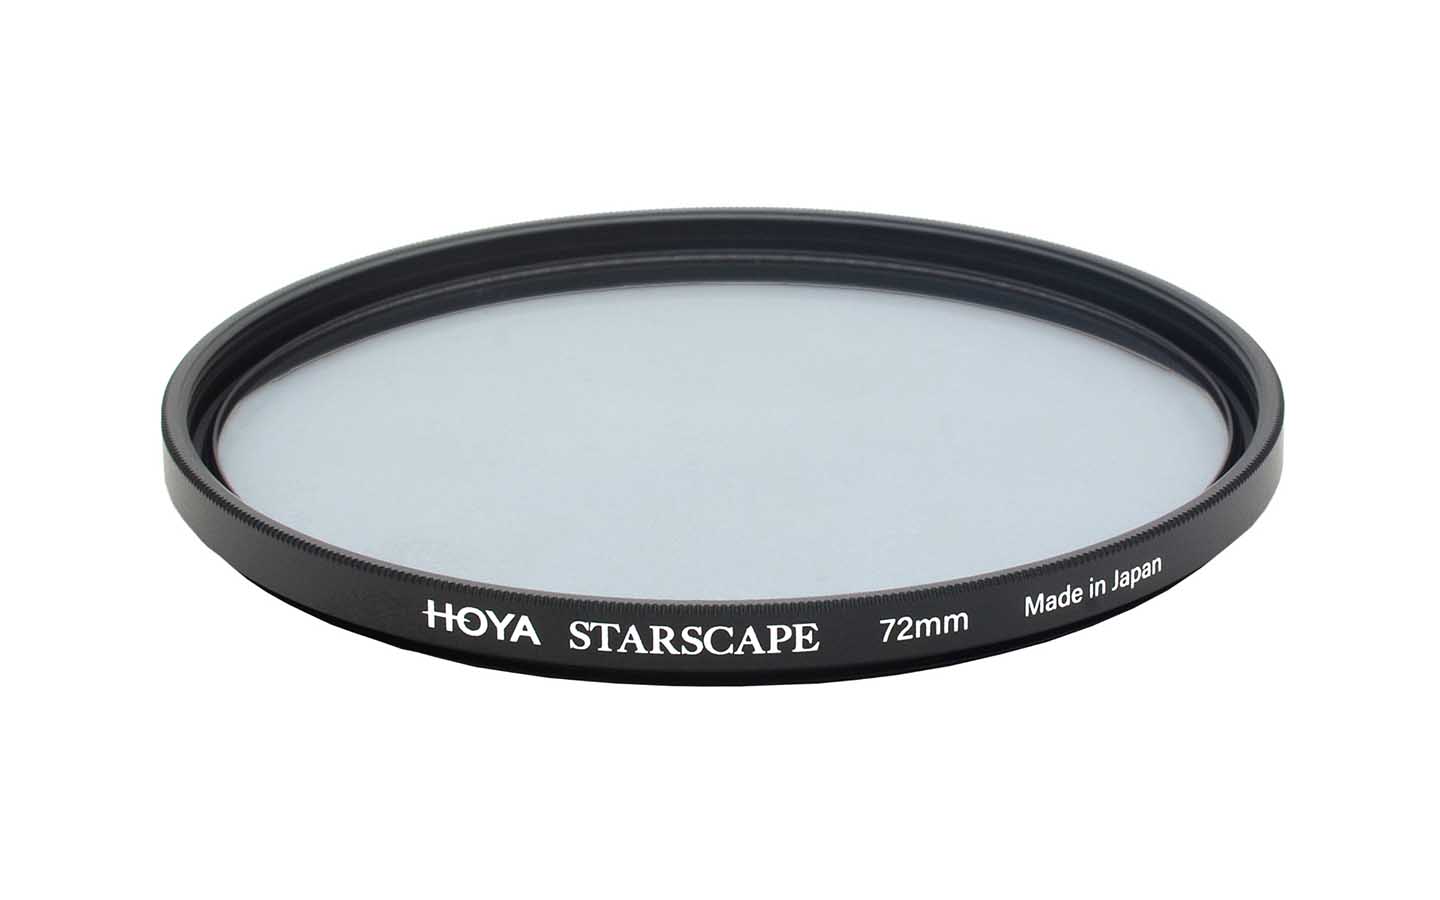 Hoya launches ProND kit, Starscape Light Pollution filter